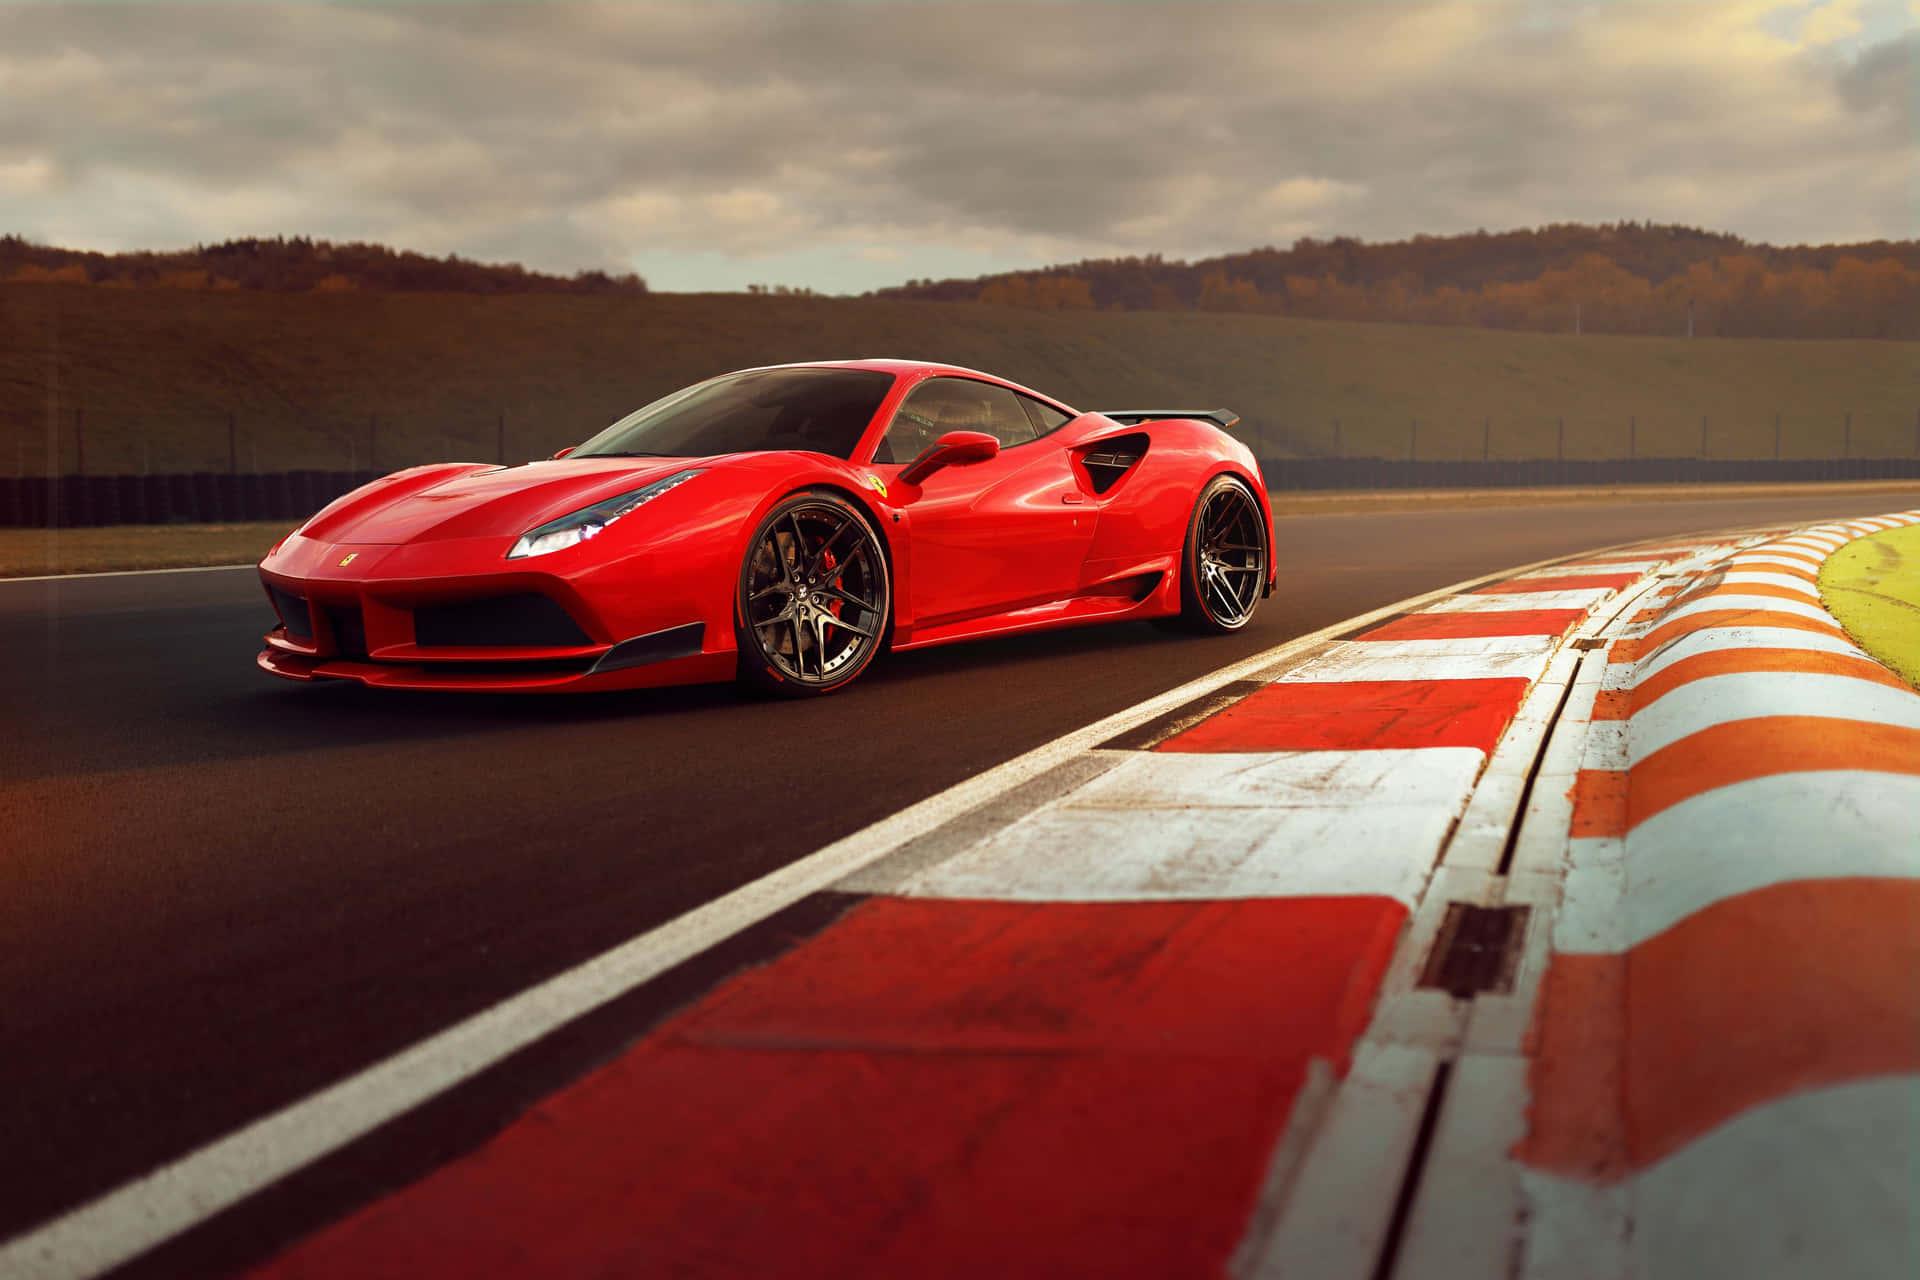 The Glistening Radiance of a Luxury 4K Ferrari